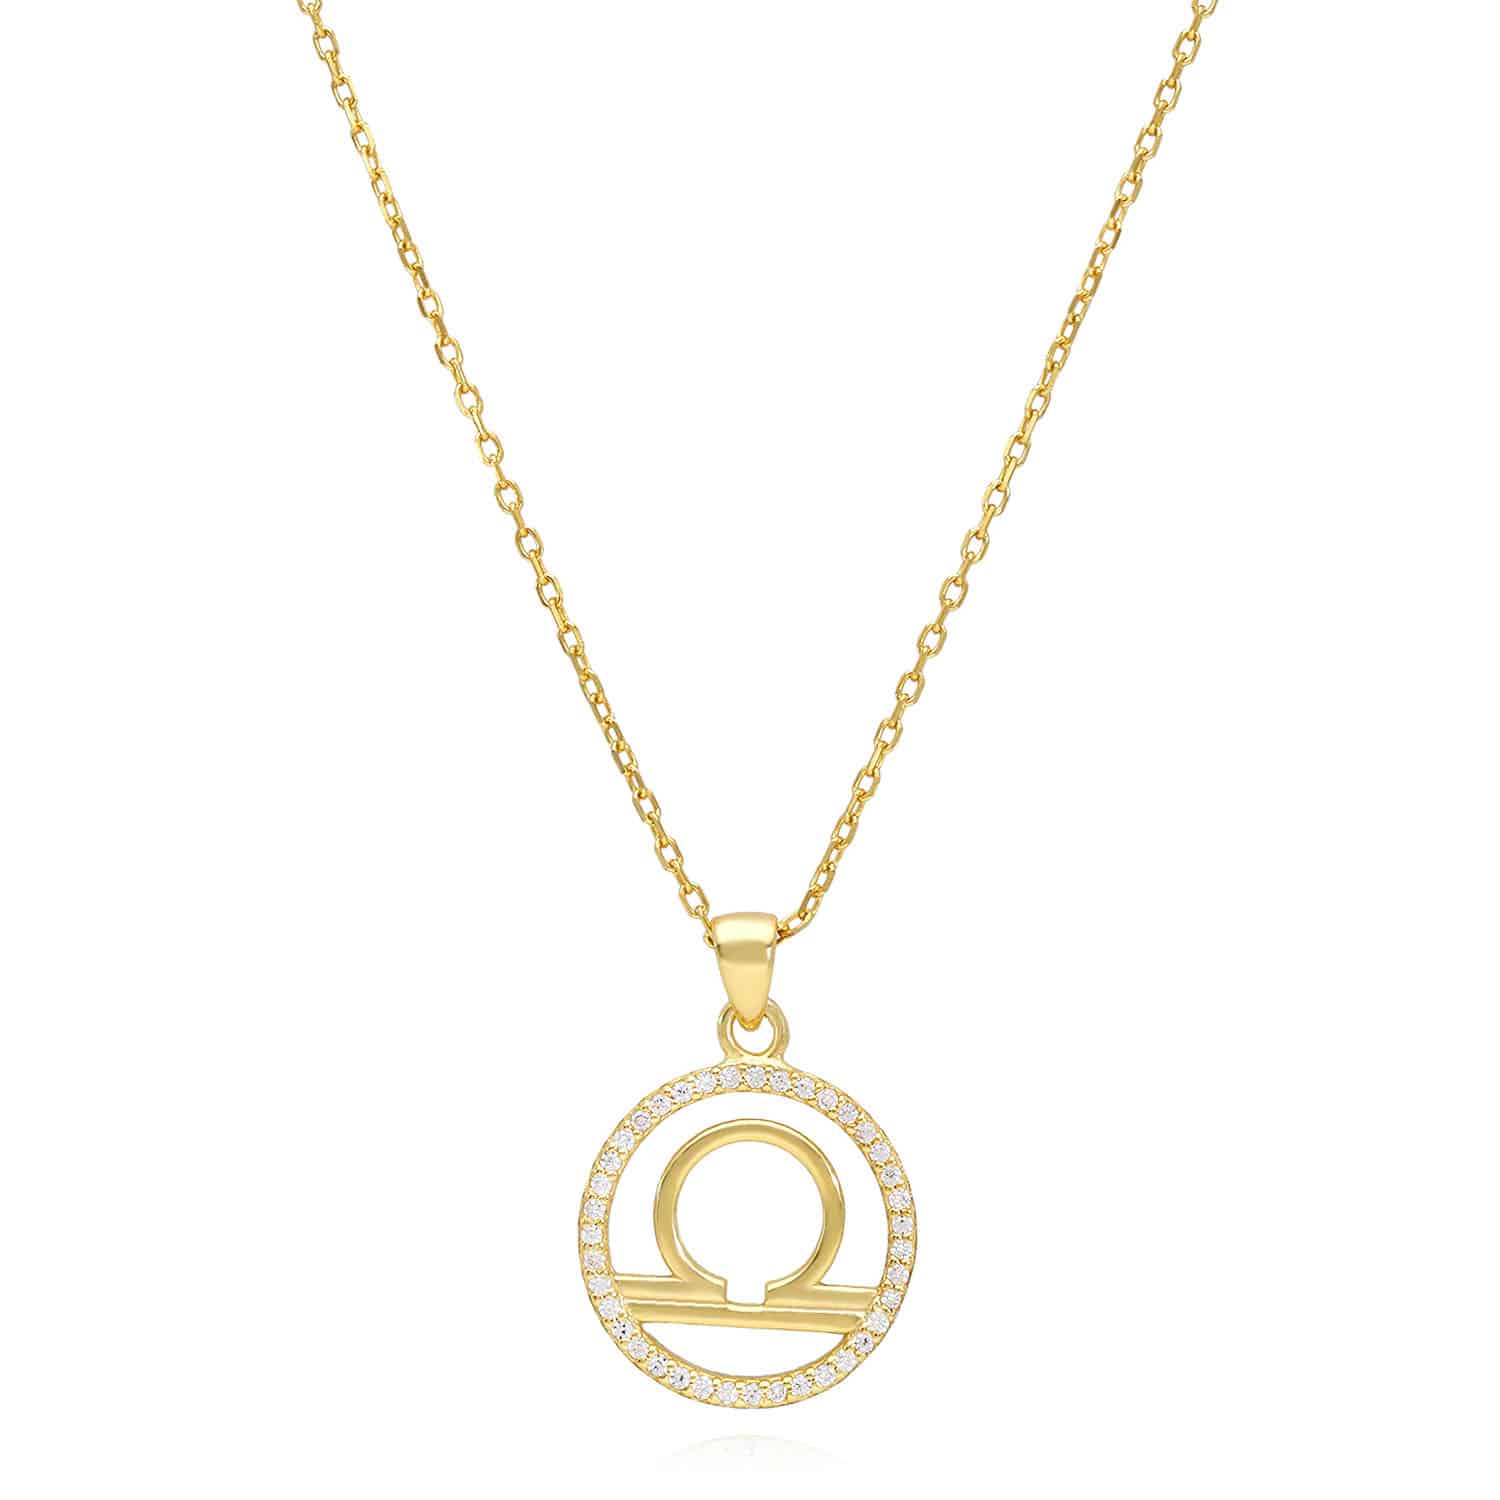 18K Gold Over Silver Simulated Diamond Zodiac Charm Pendant Necklace 16"-18" Adj - Libra